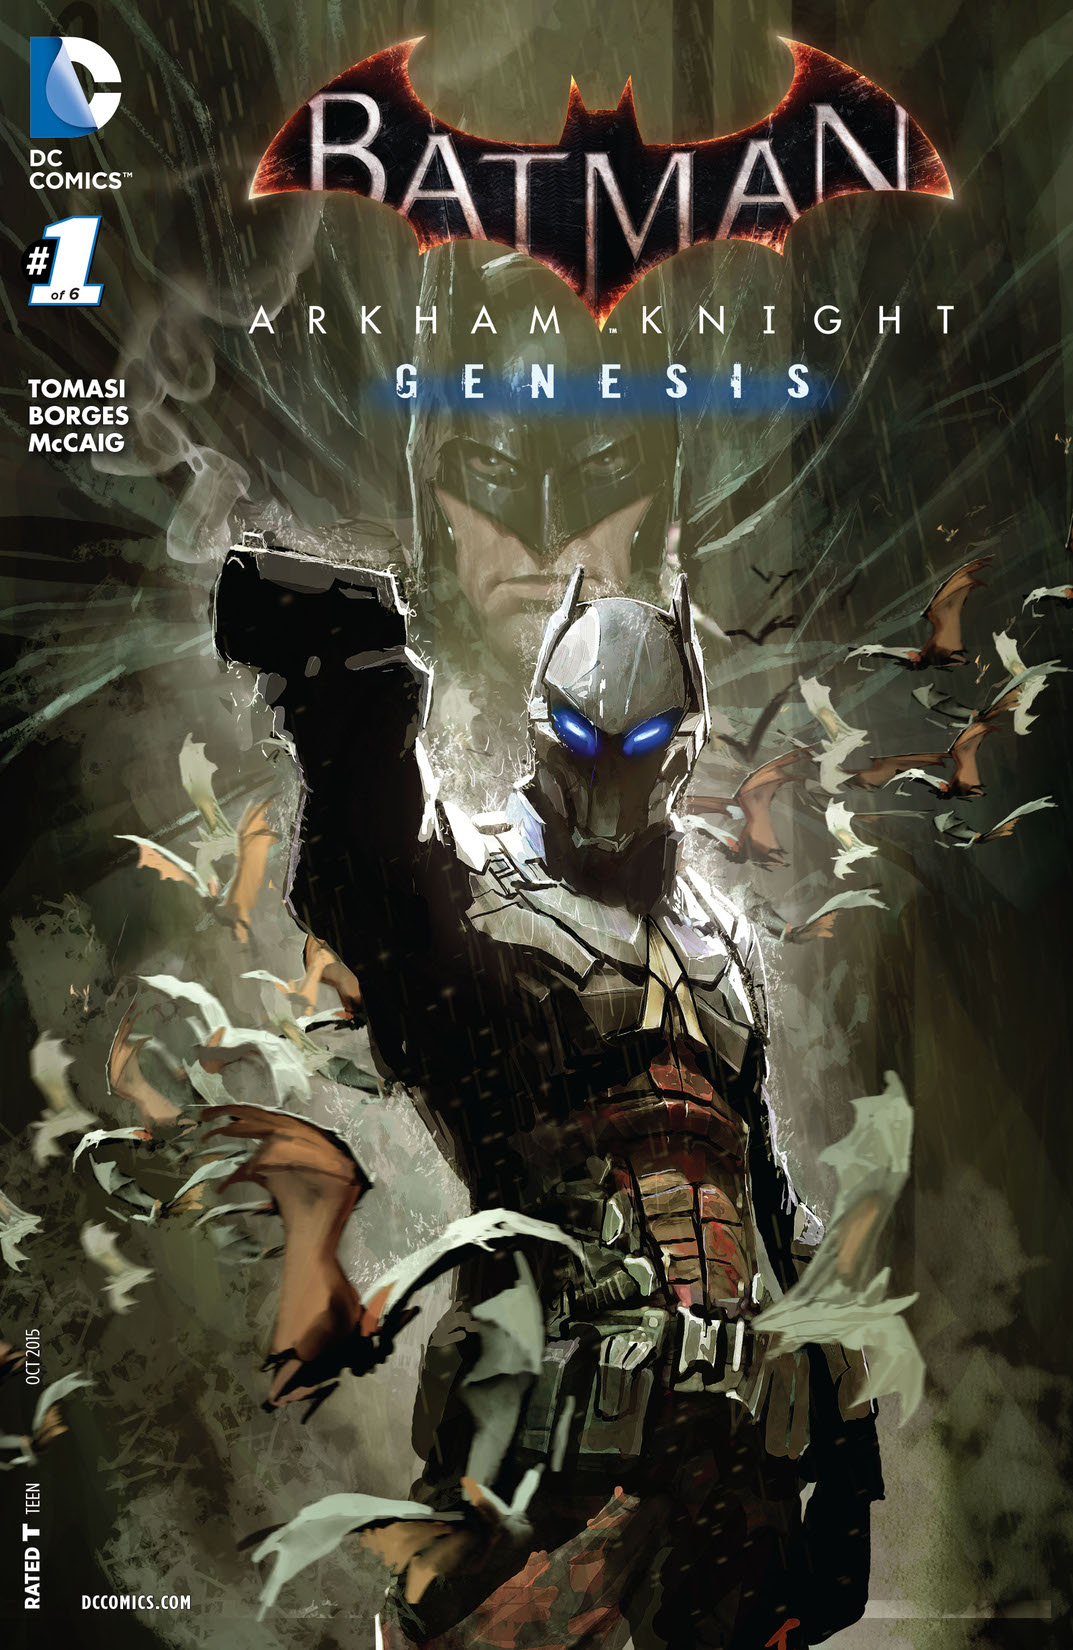 Batman: Arkham Knight Genesis #1 preview images